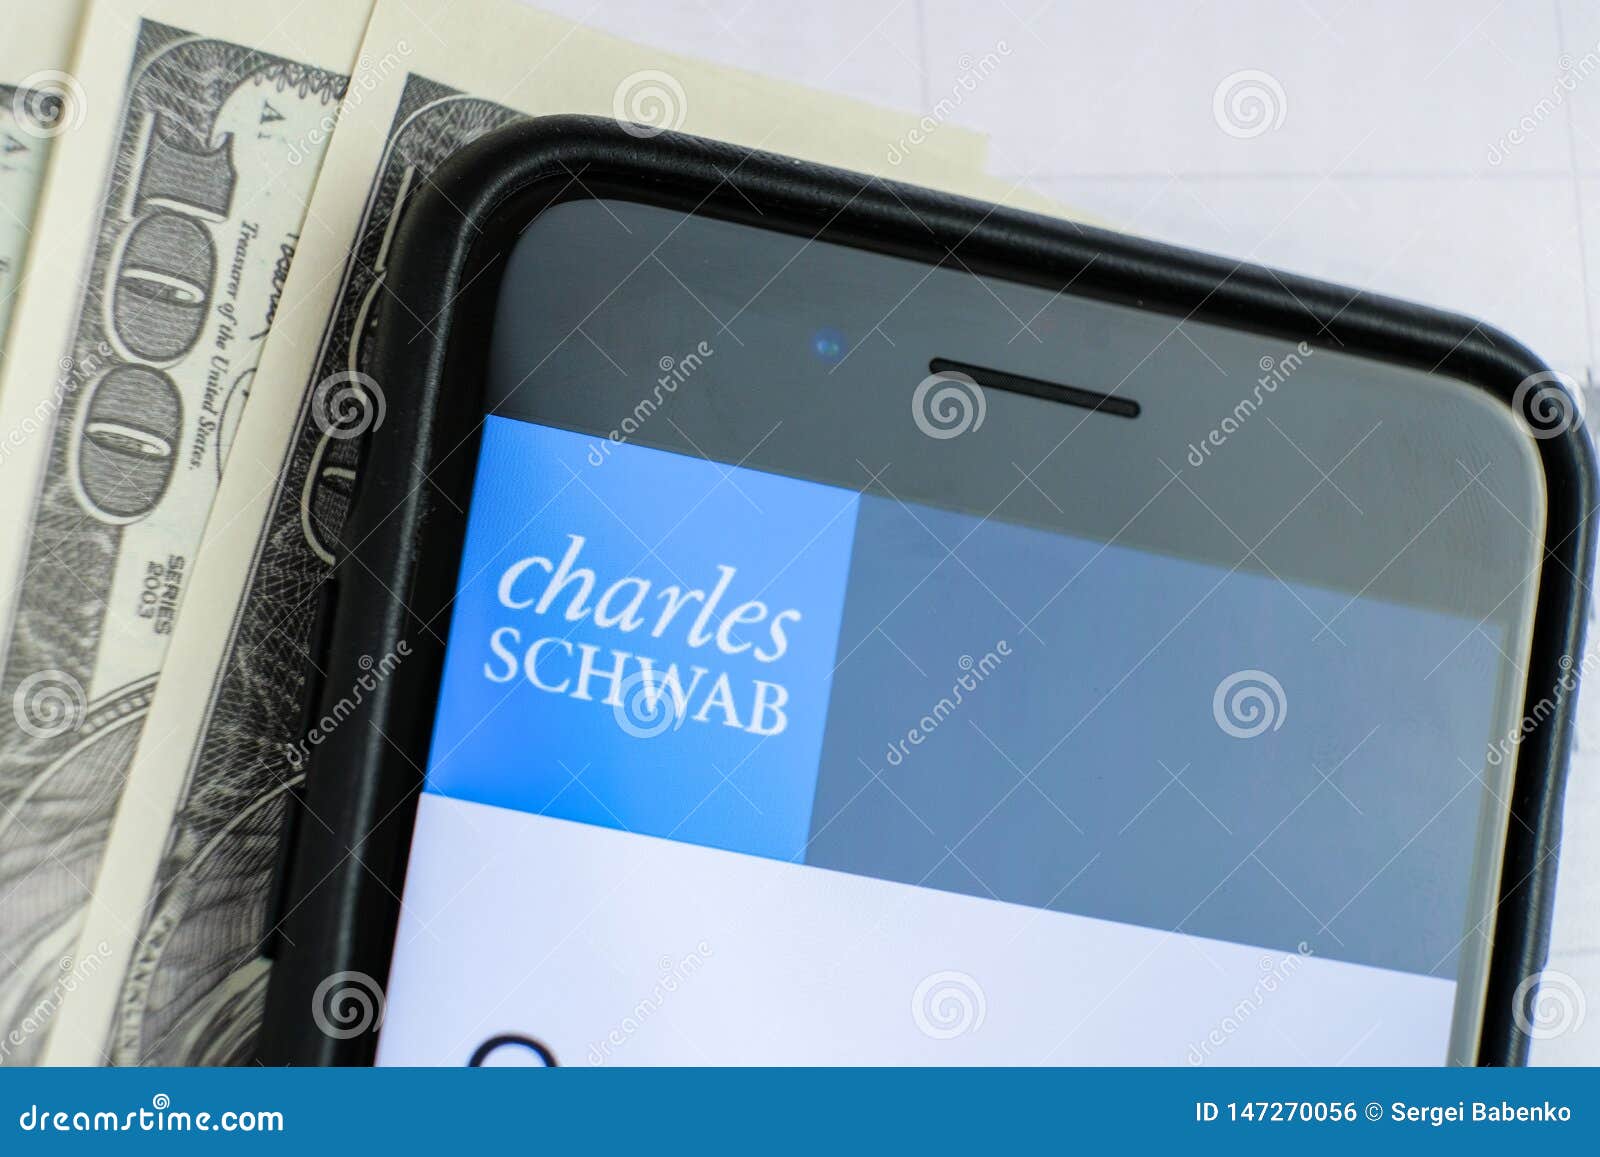 Charles Schwab Charts